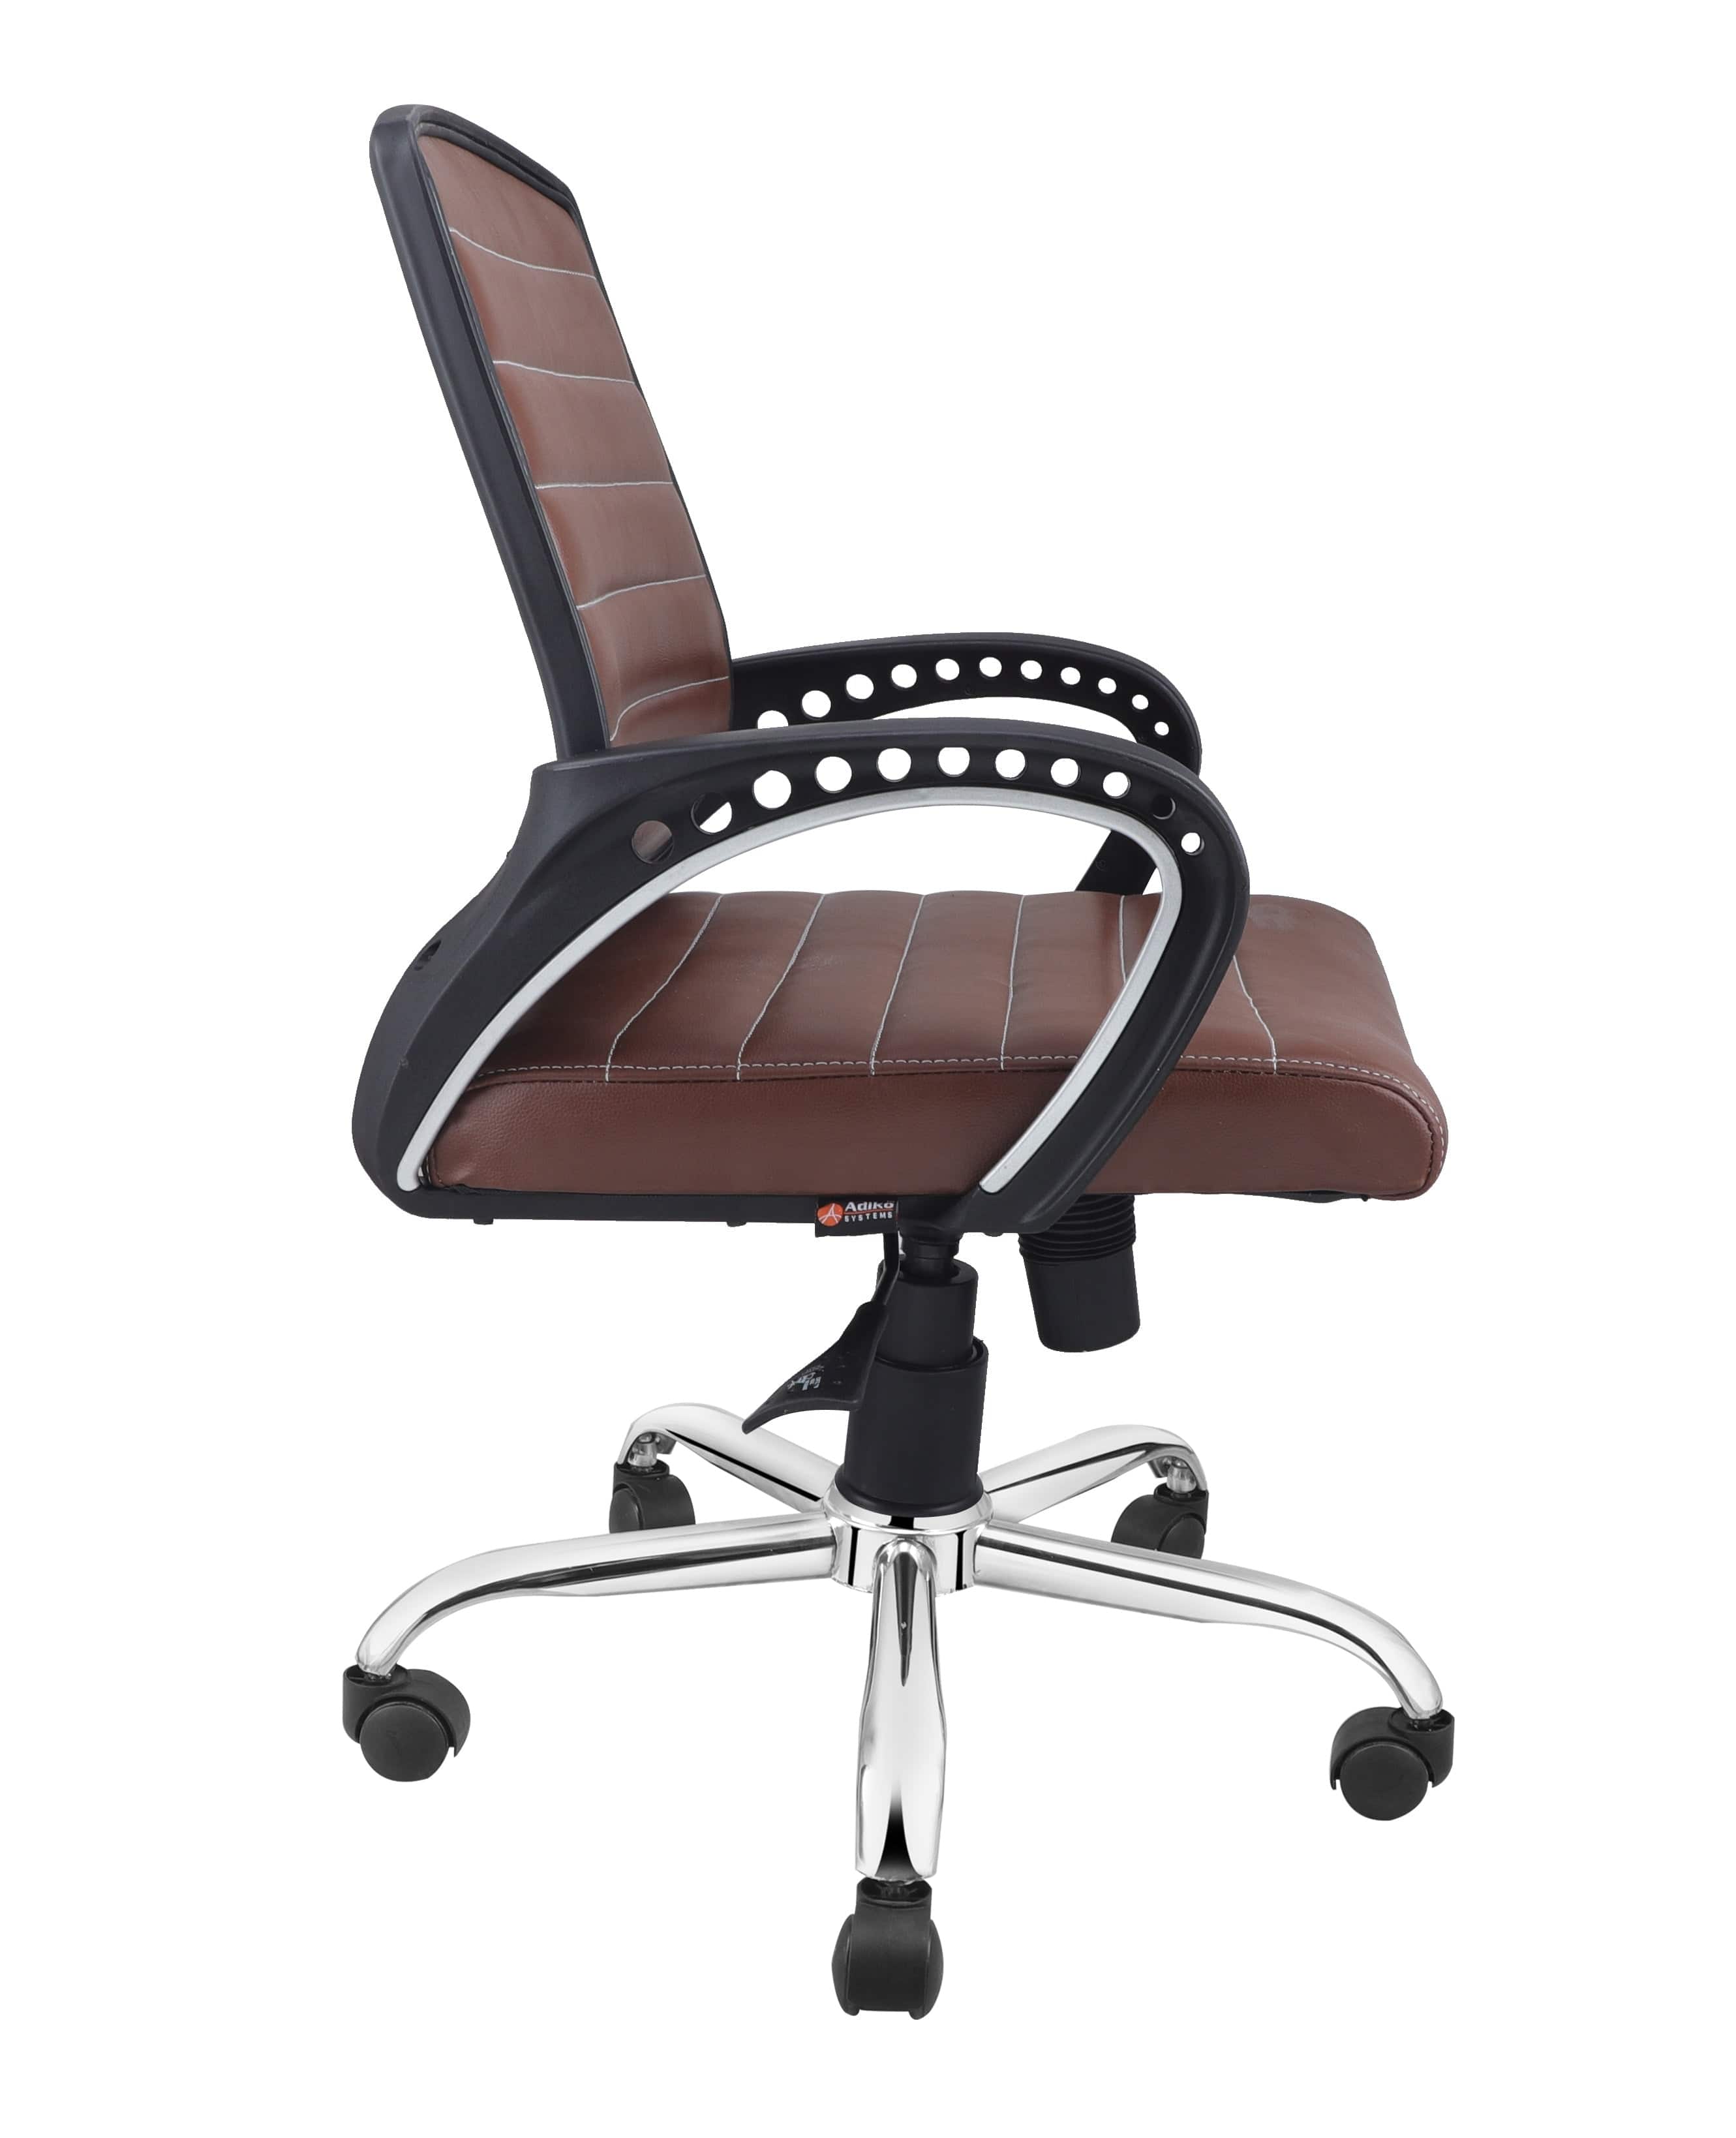 Smart Ergonomic Office Chair in TAN